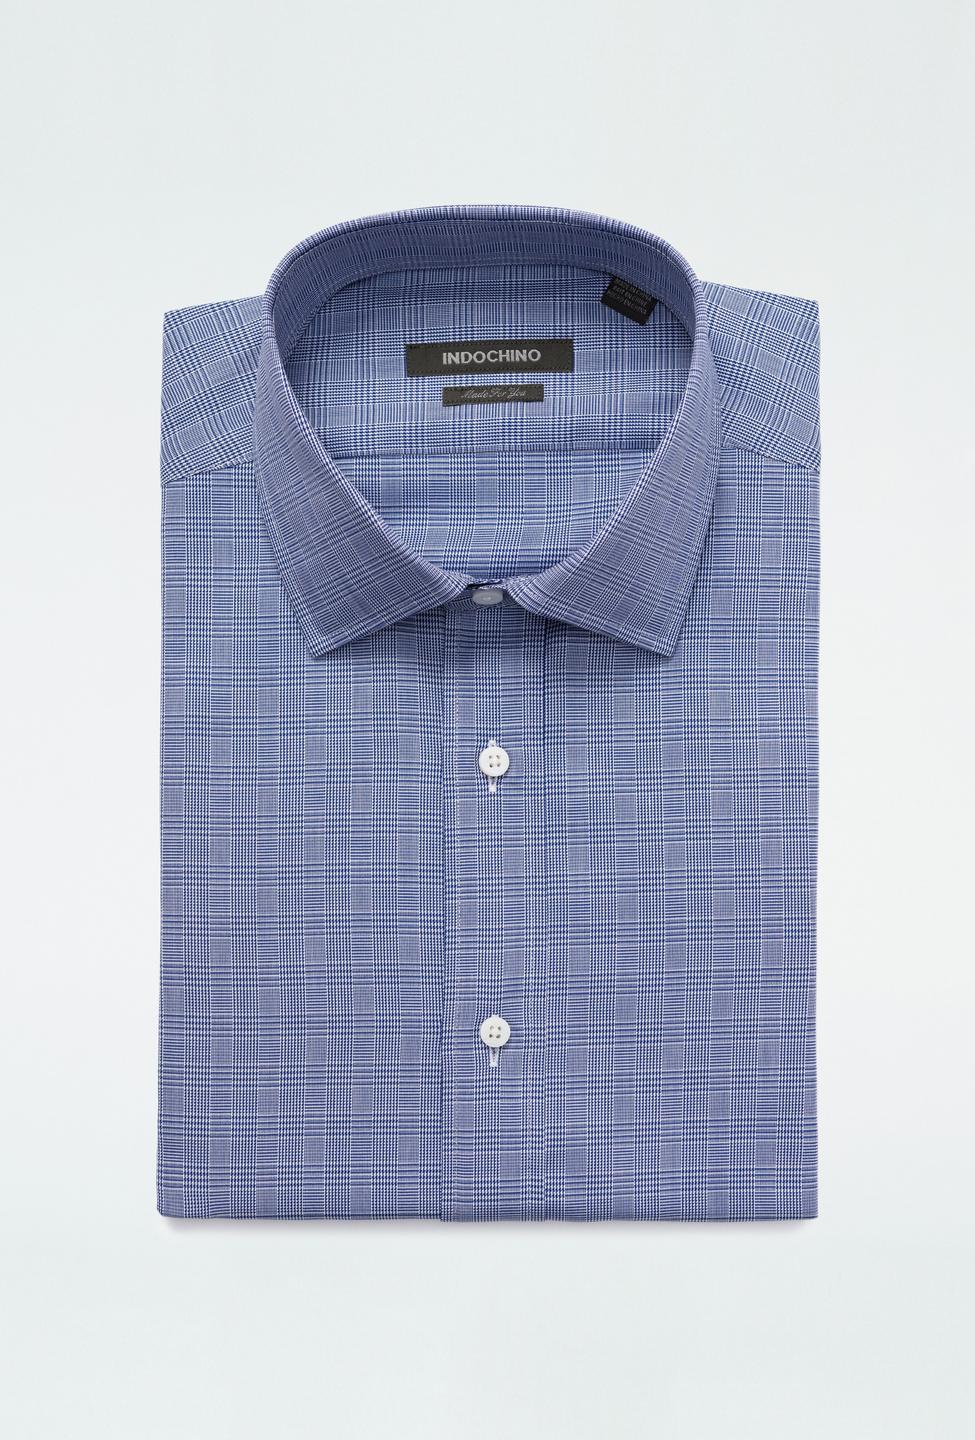 Blue shirt - Hadleigh Plaid Design from Premium Indochino Collection